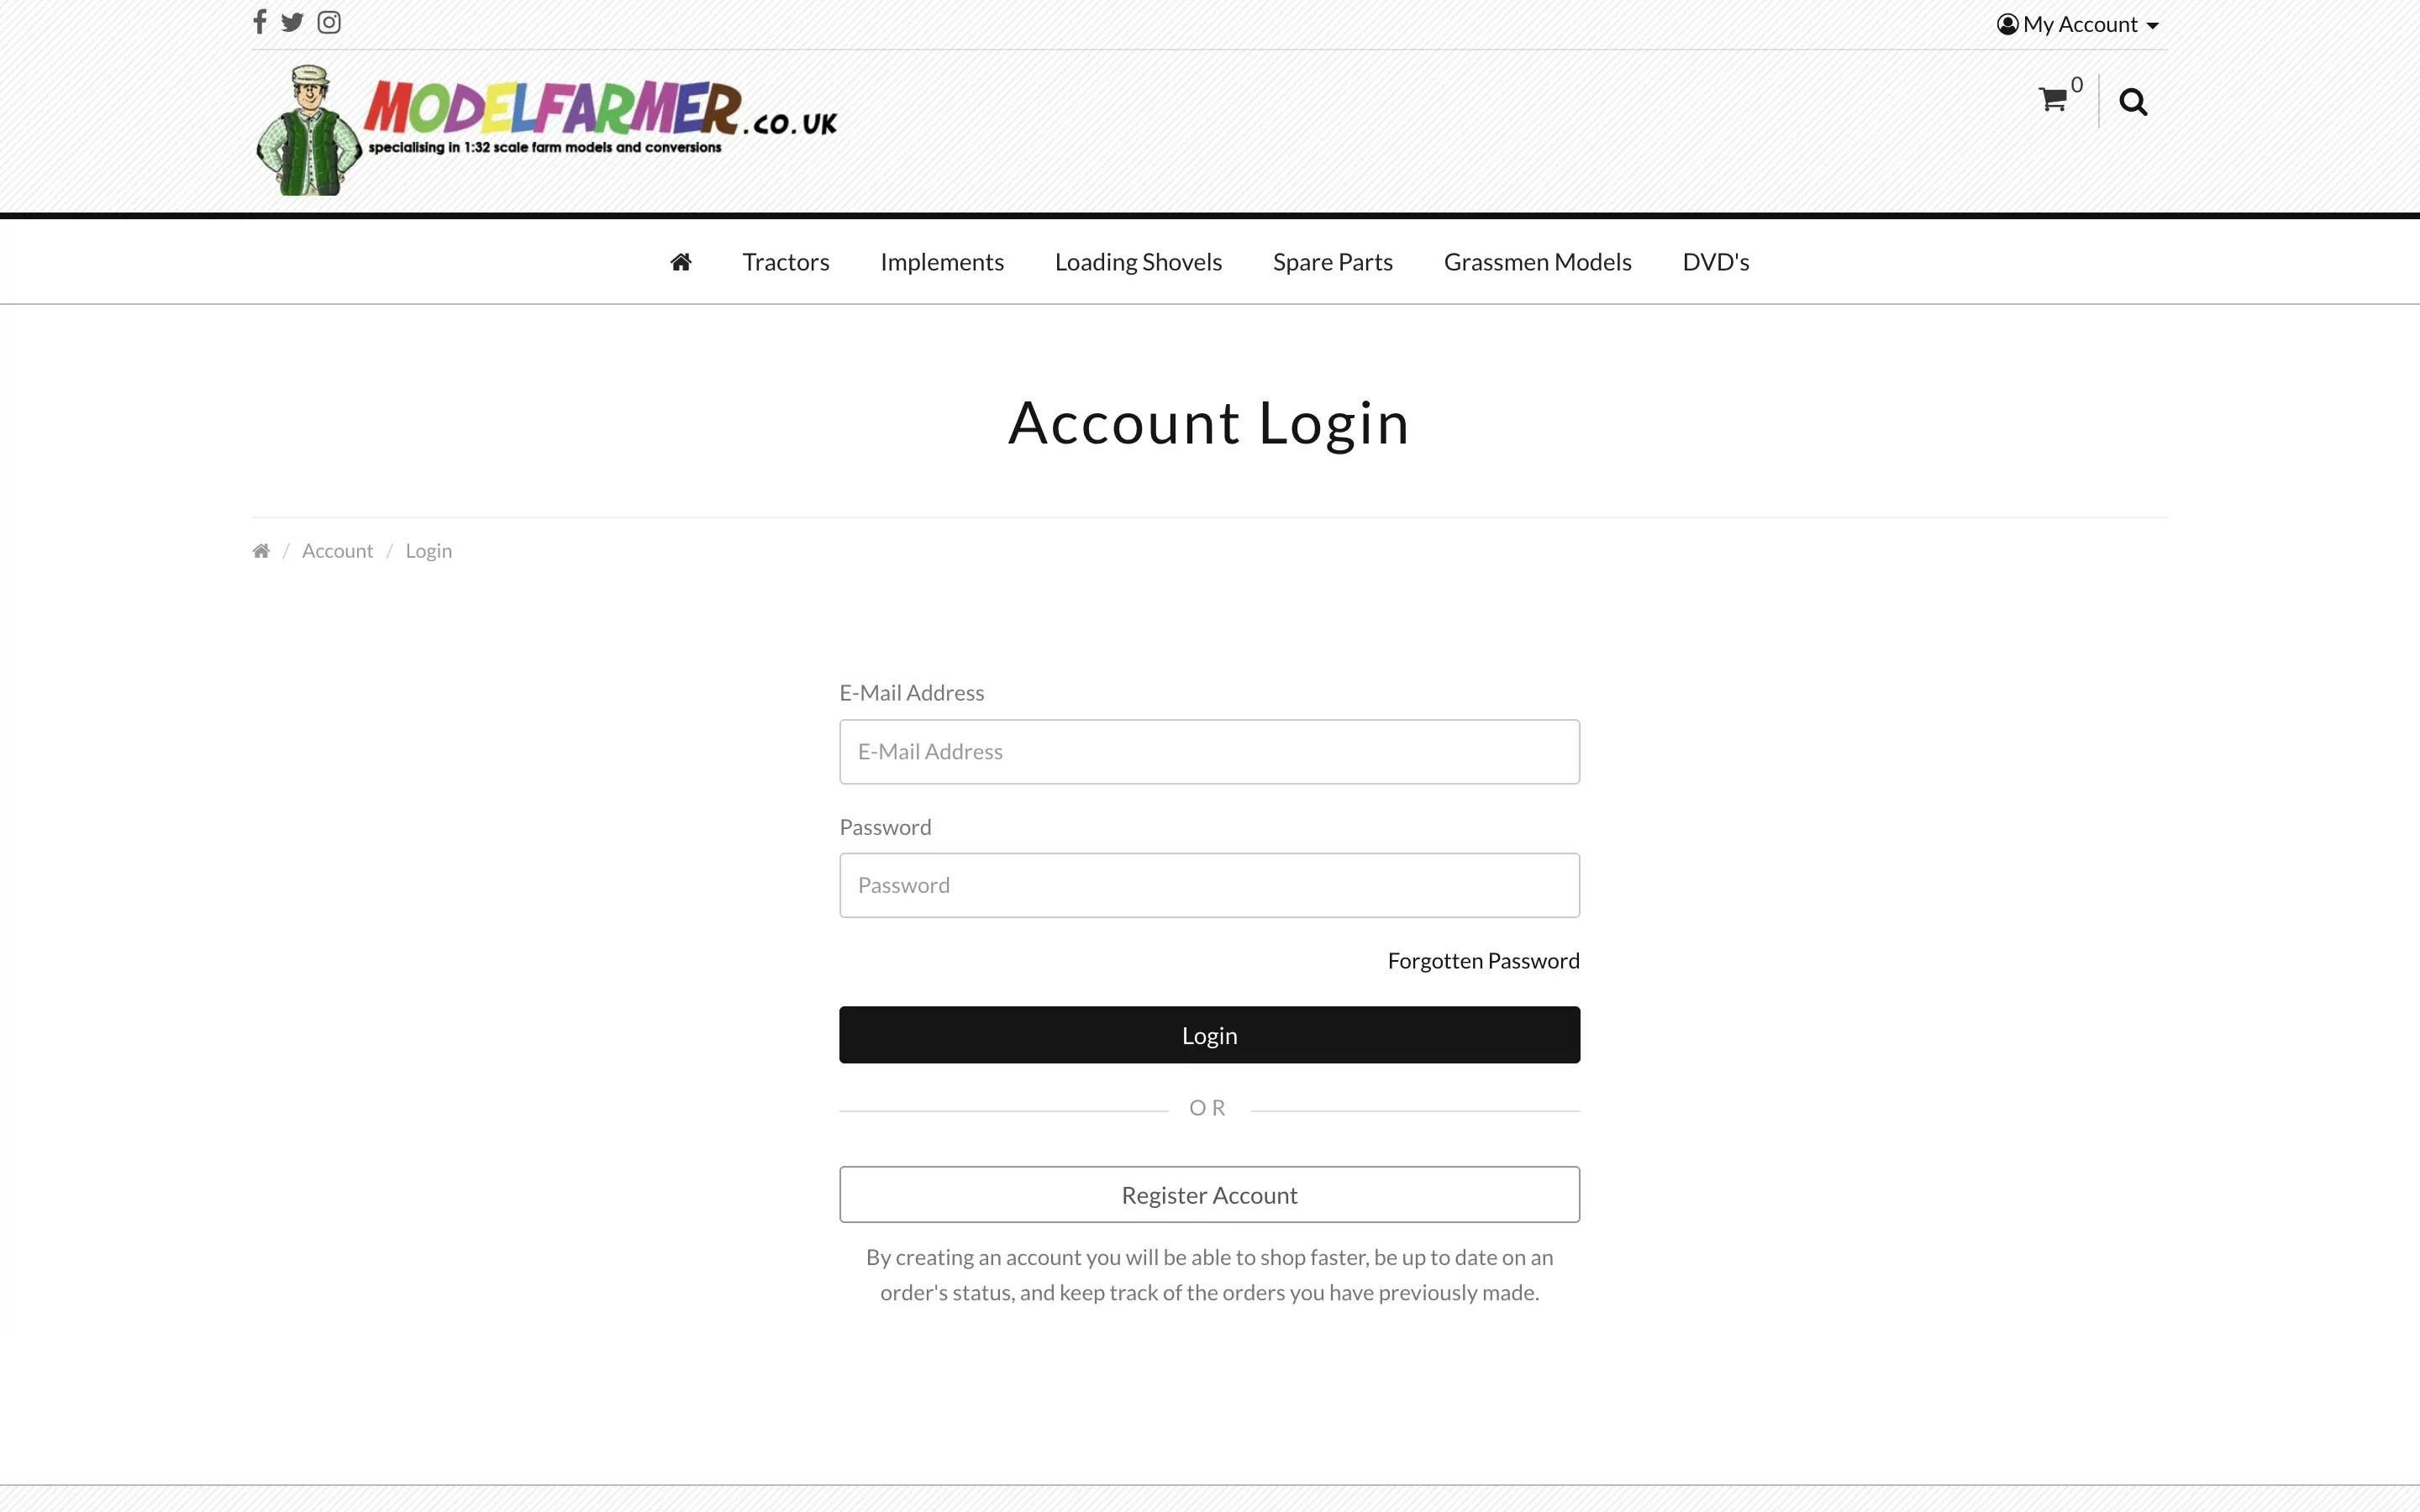 ModelFarmer.co.uk account login page website design on desktop